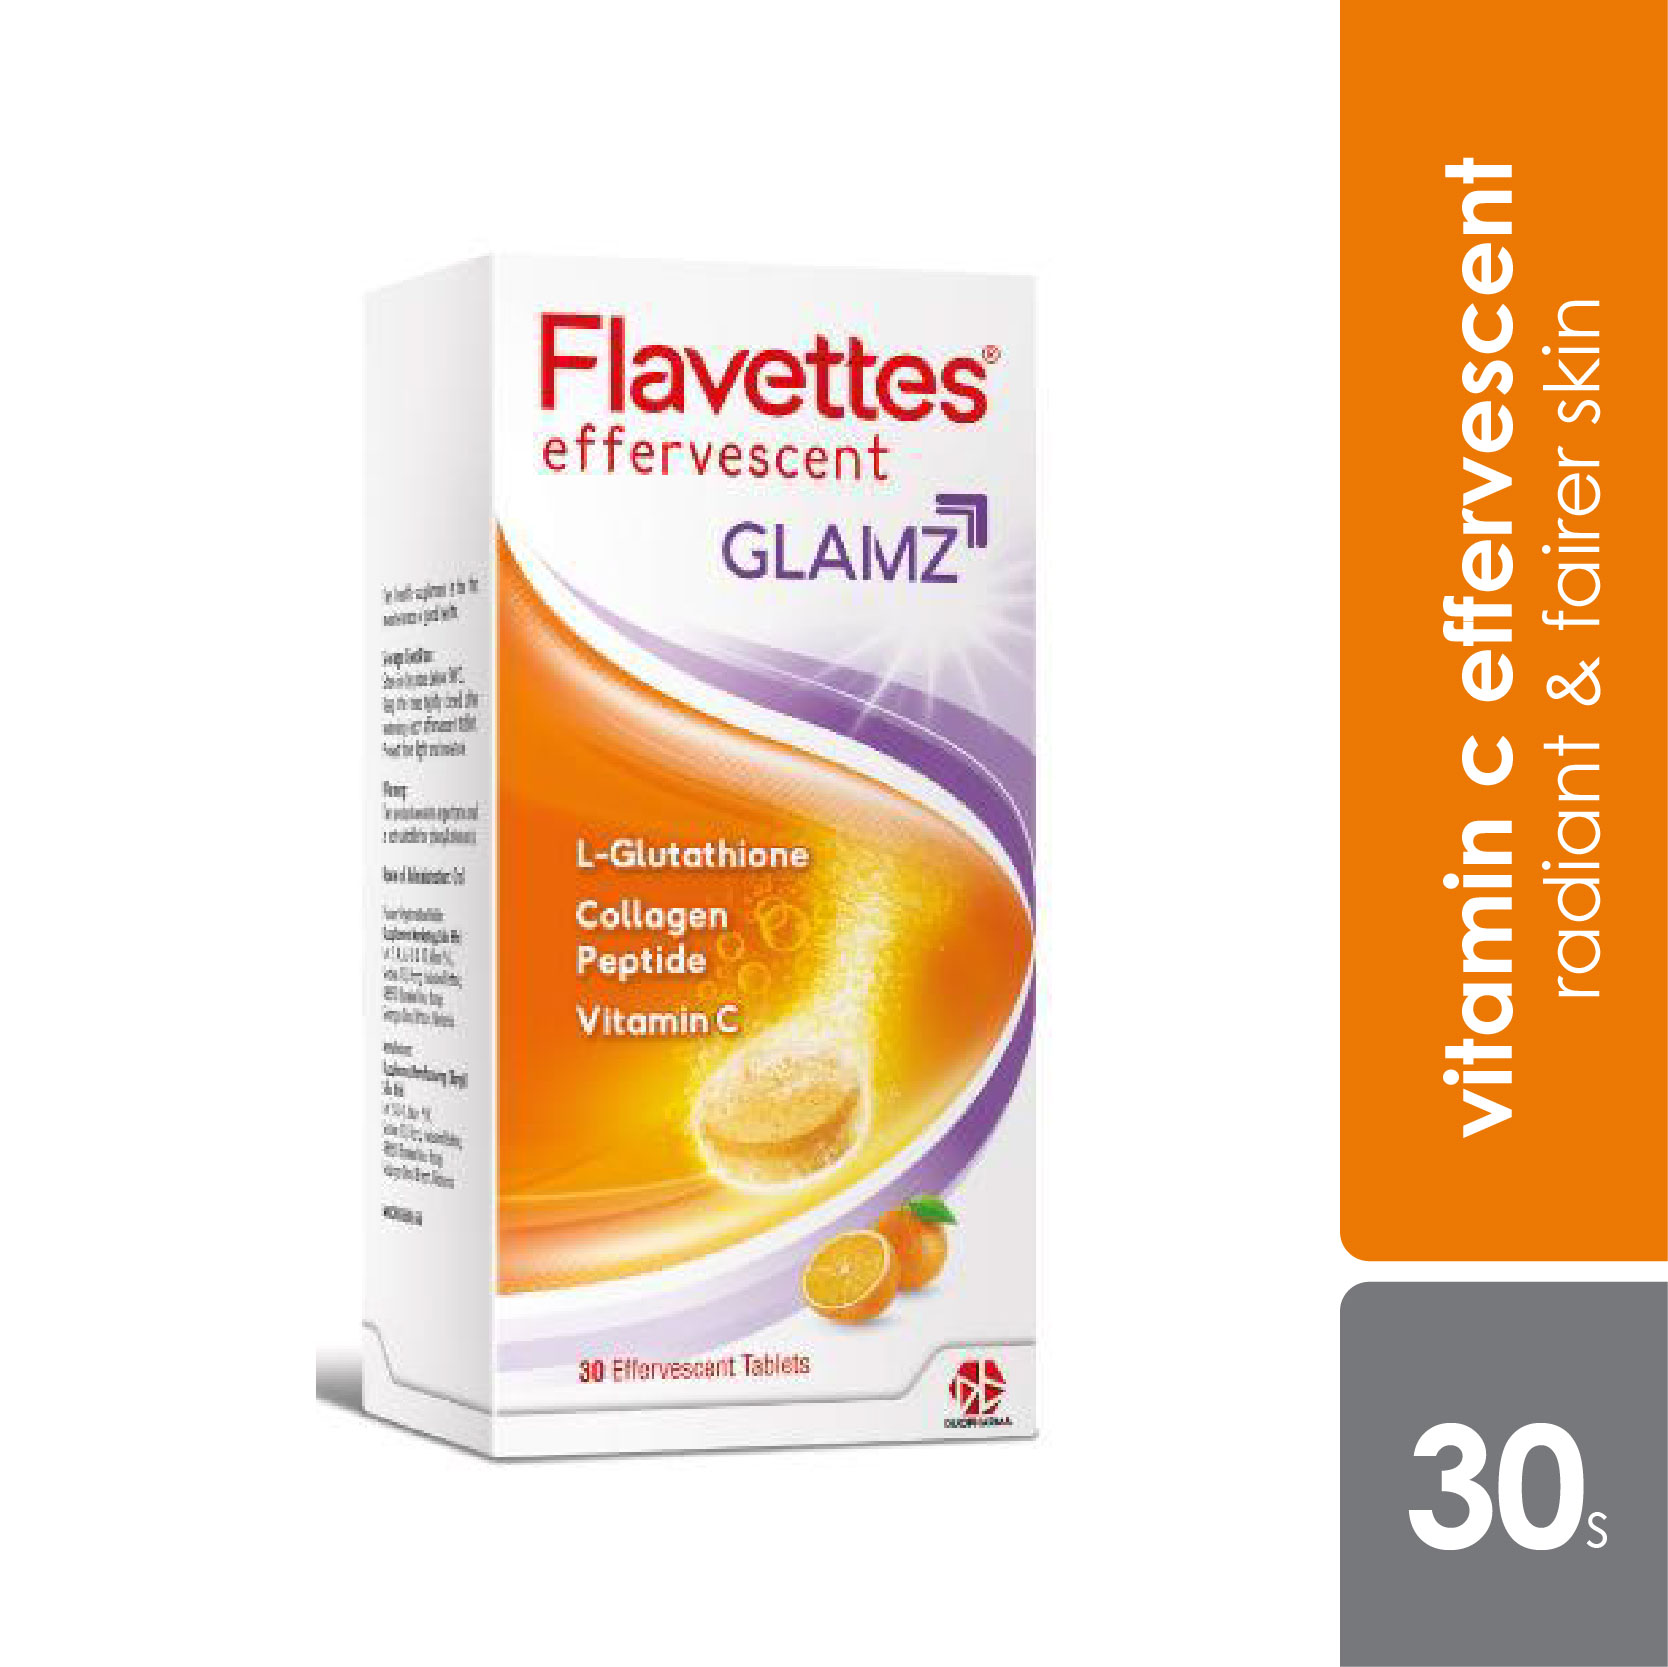 Flavettes Glamz Effervescent 30s Skin Health Alpro Pharmacy